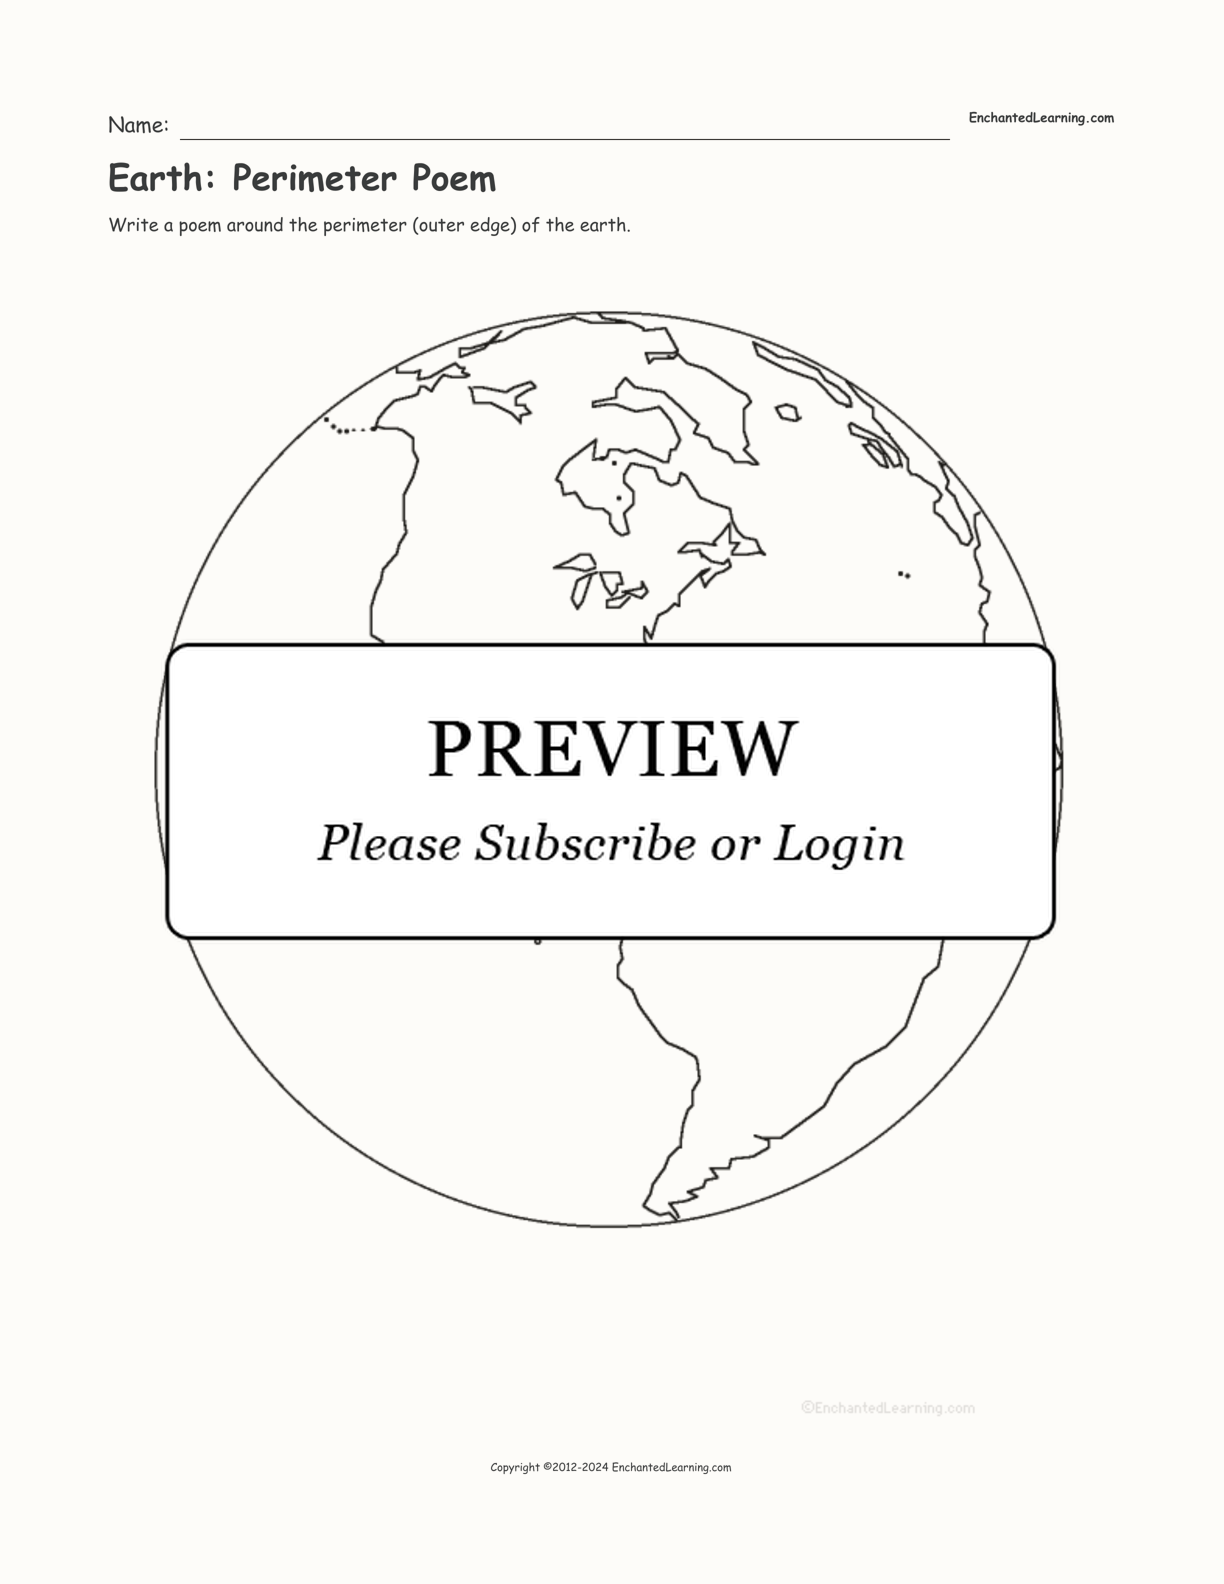 Earth: Perimeter Poem interactive worksheet page 1